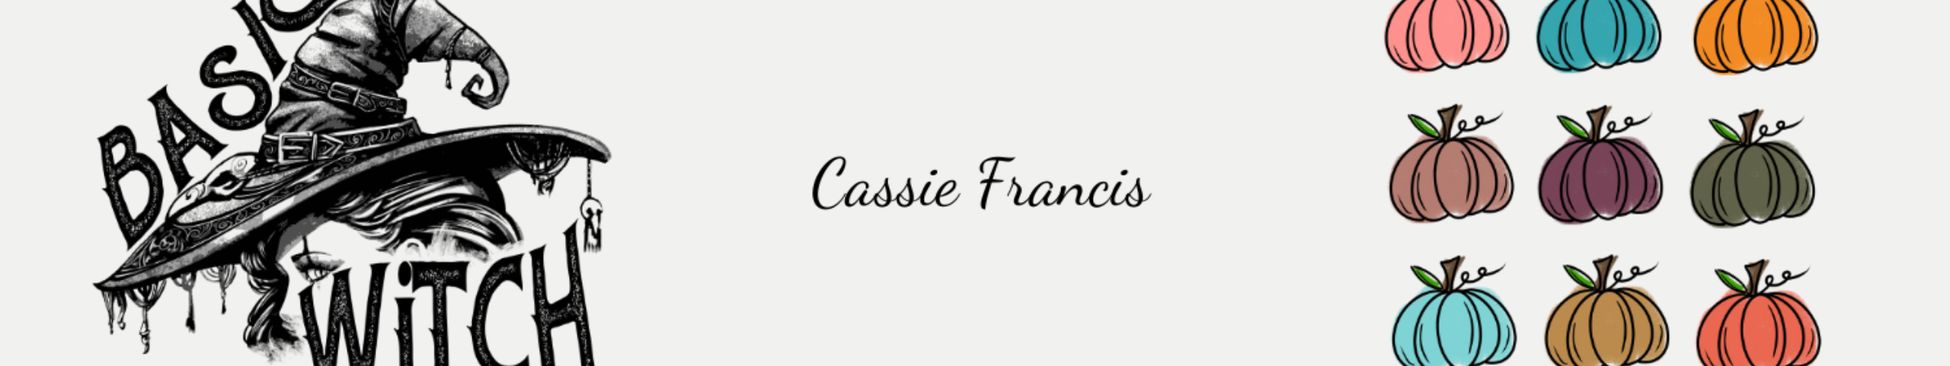 Cassie Francis